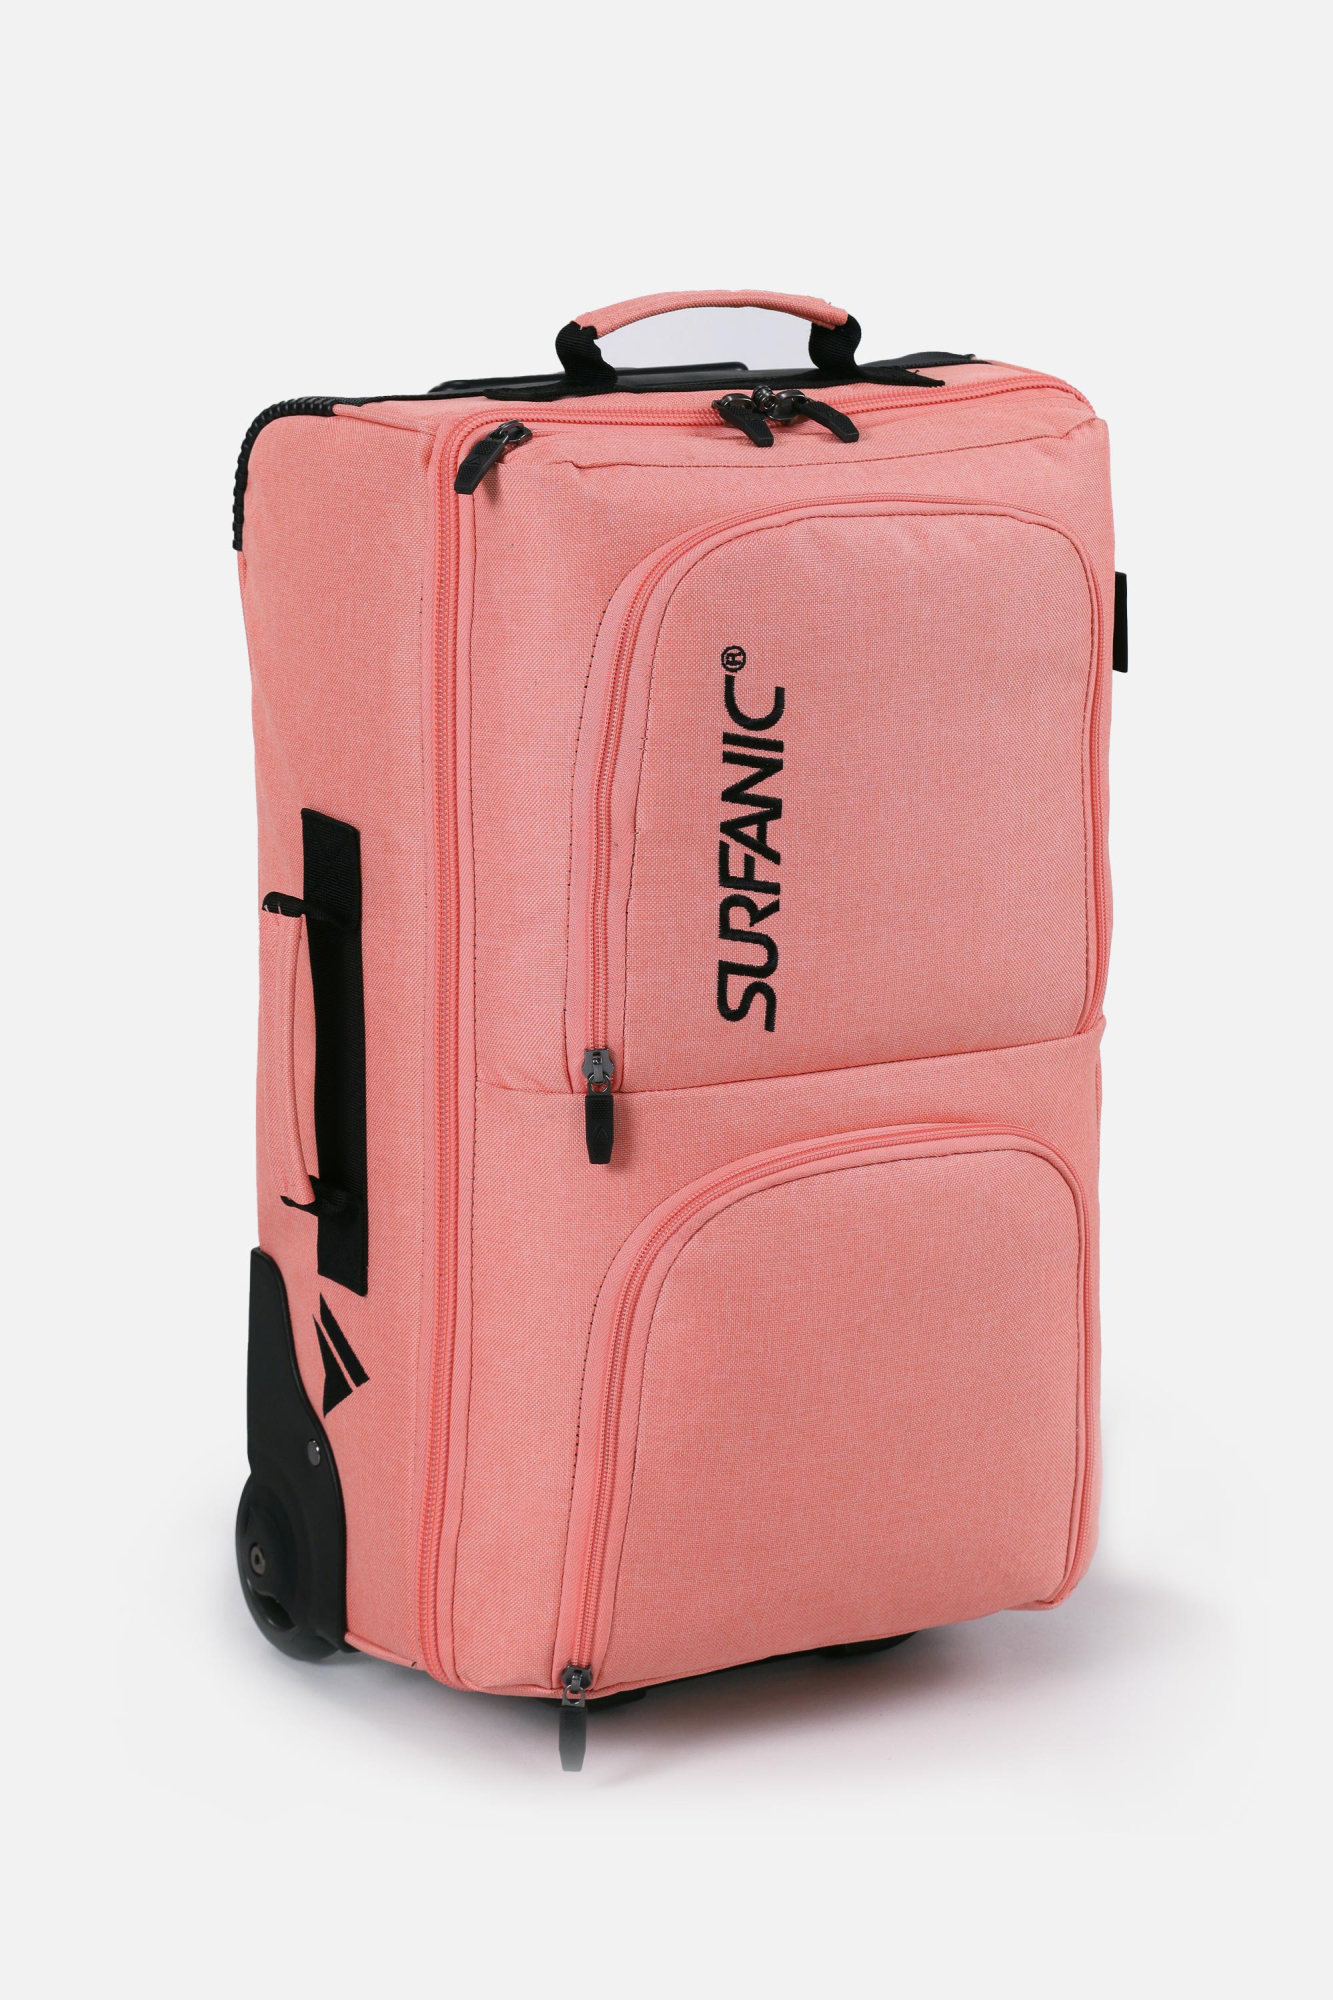 Surfanic Unisex Maxim 40 Roller Bag Pink - Size: 40 Litre